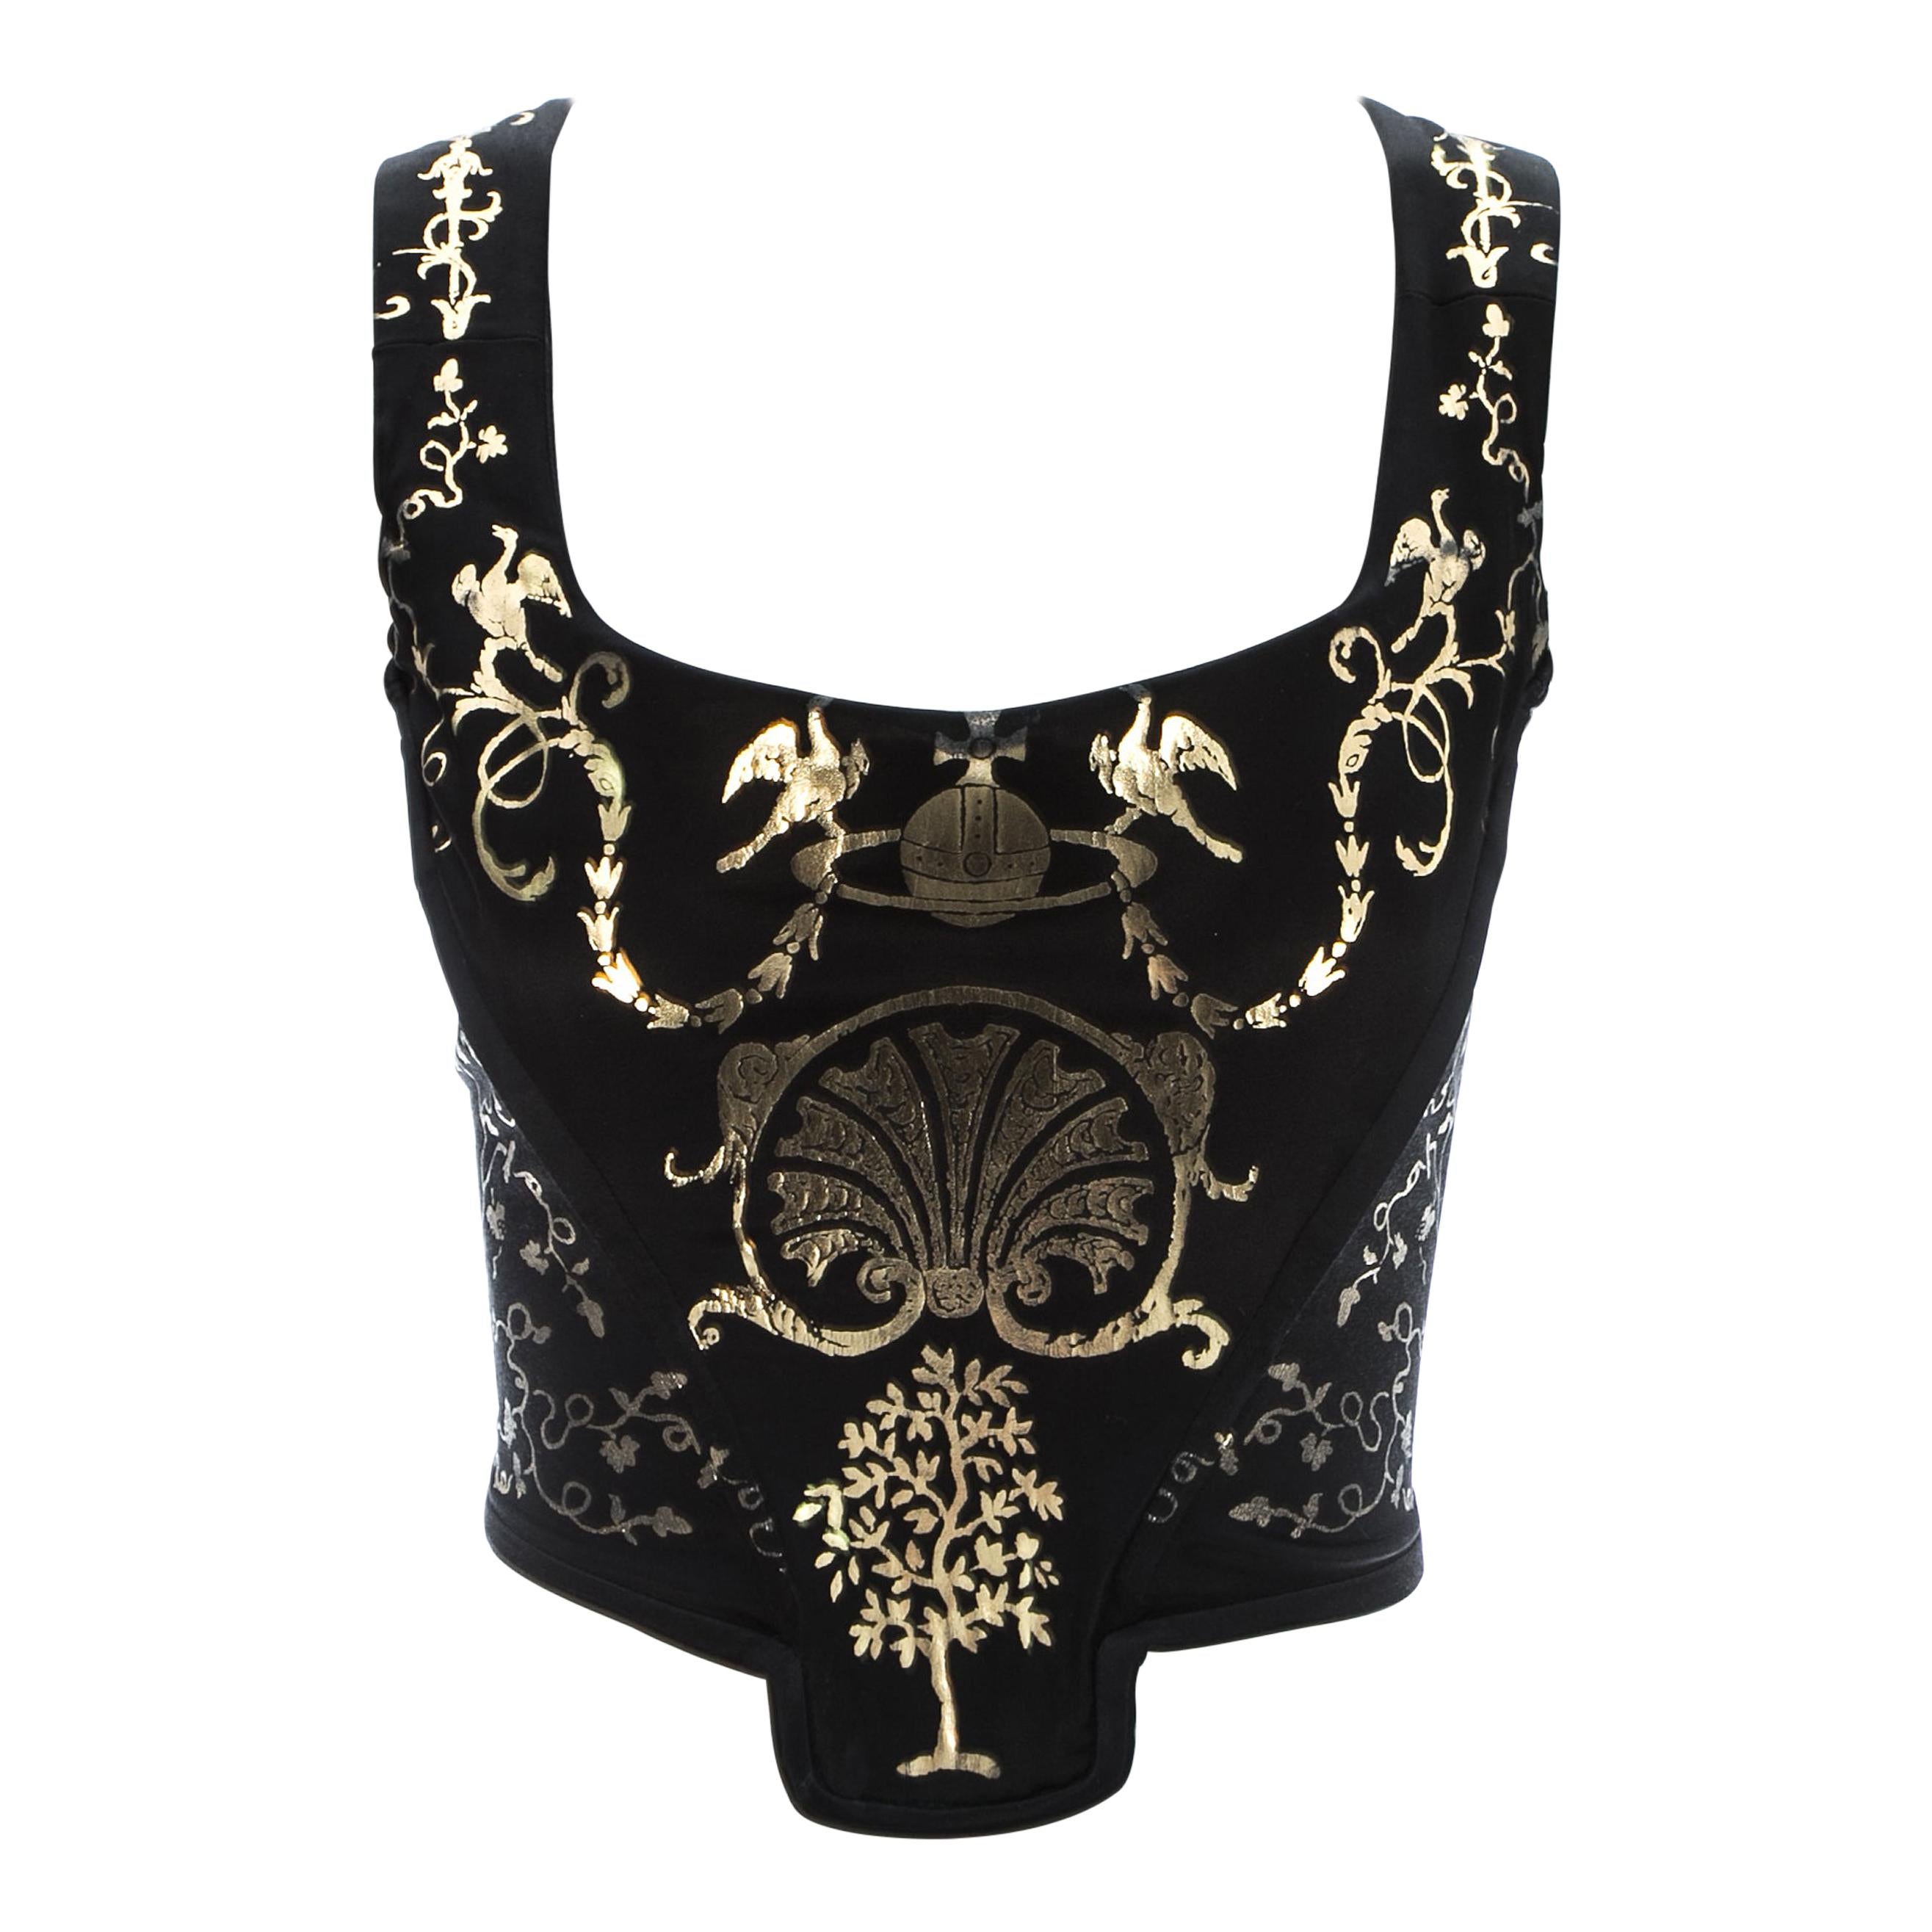 Vivienne Westwood black satin corset with metallic gold motifs, fw 1990